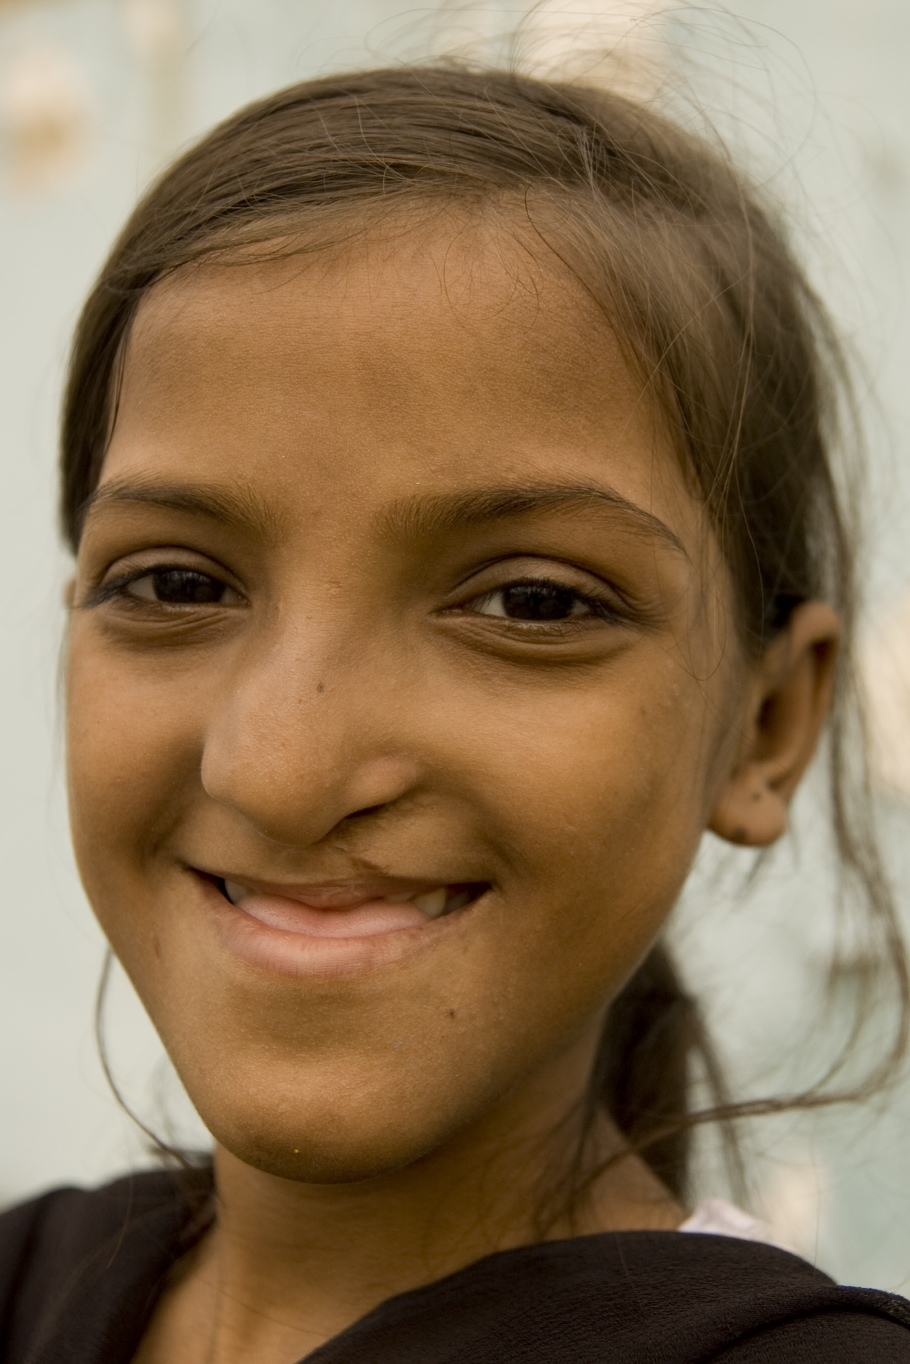 Hena Hussain (11 yearls old, flower picture)